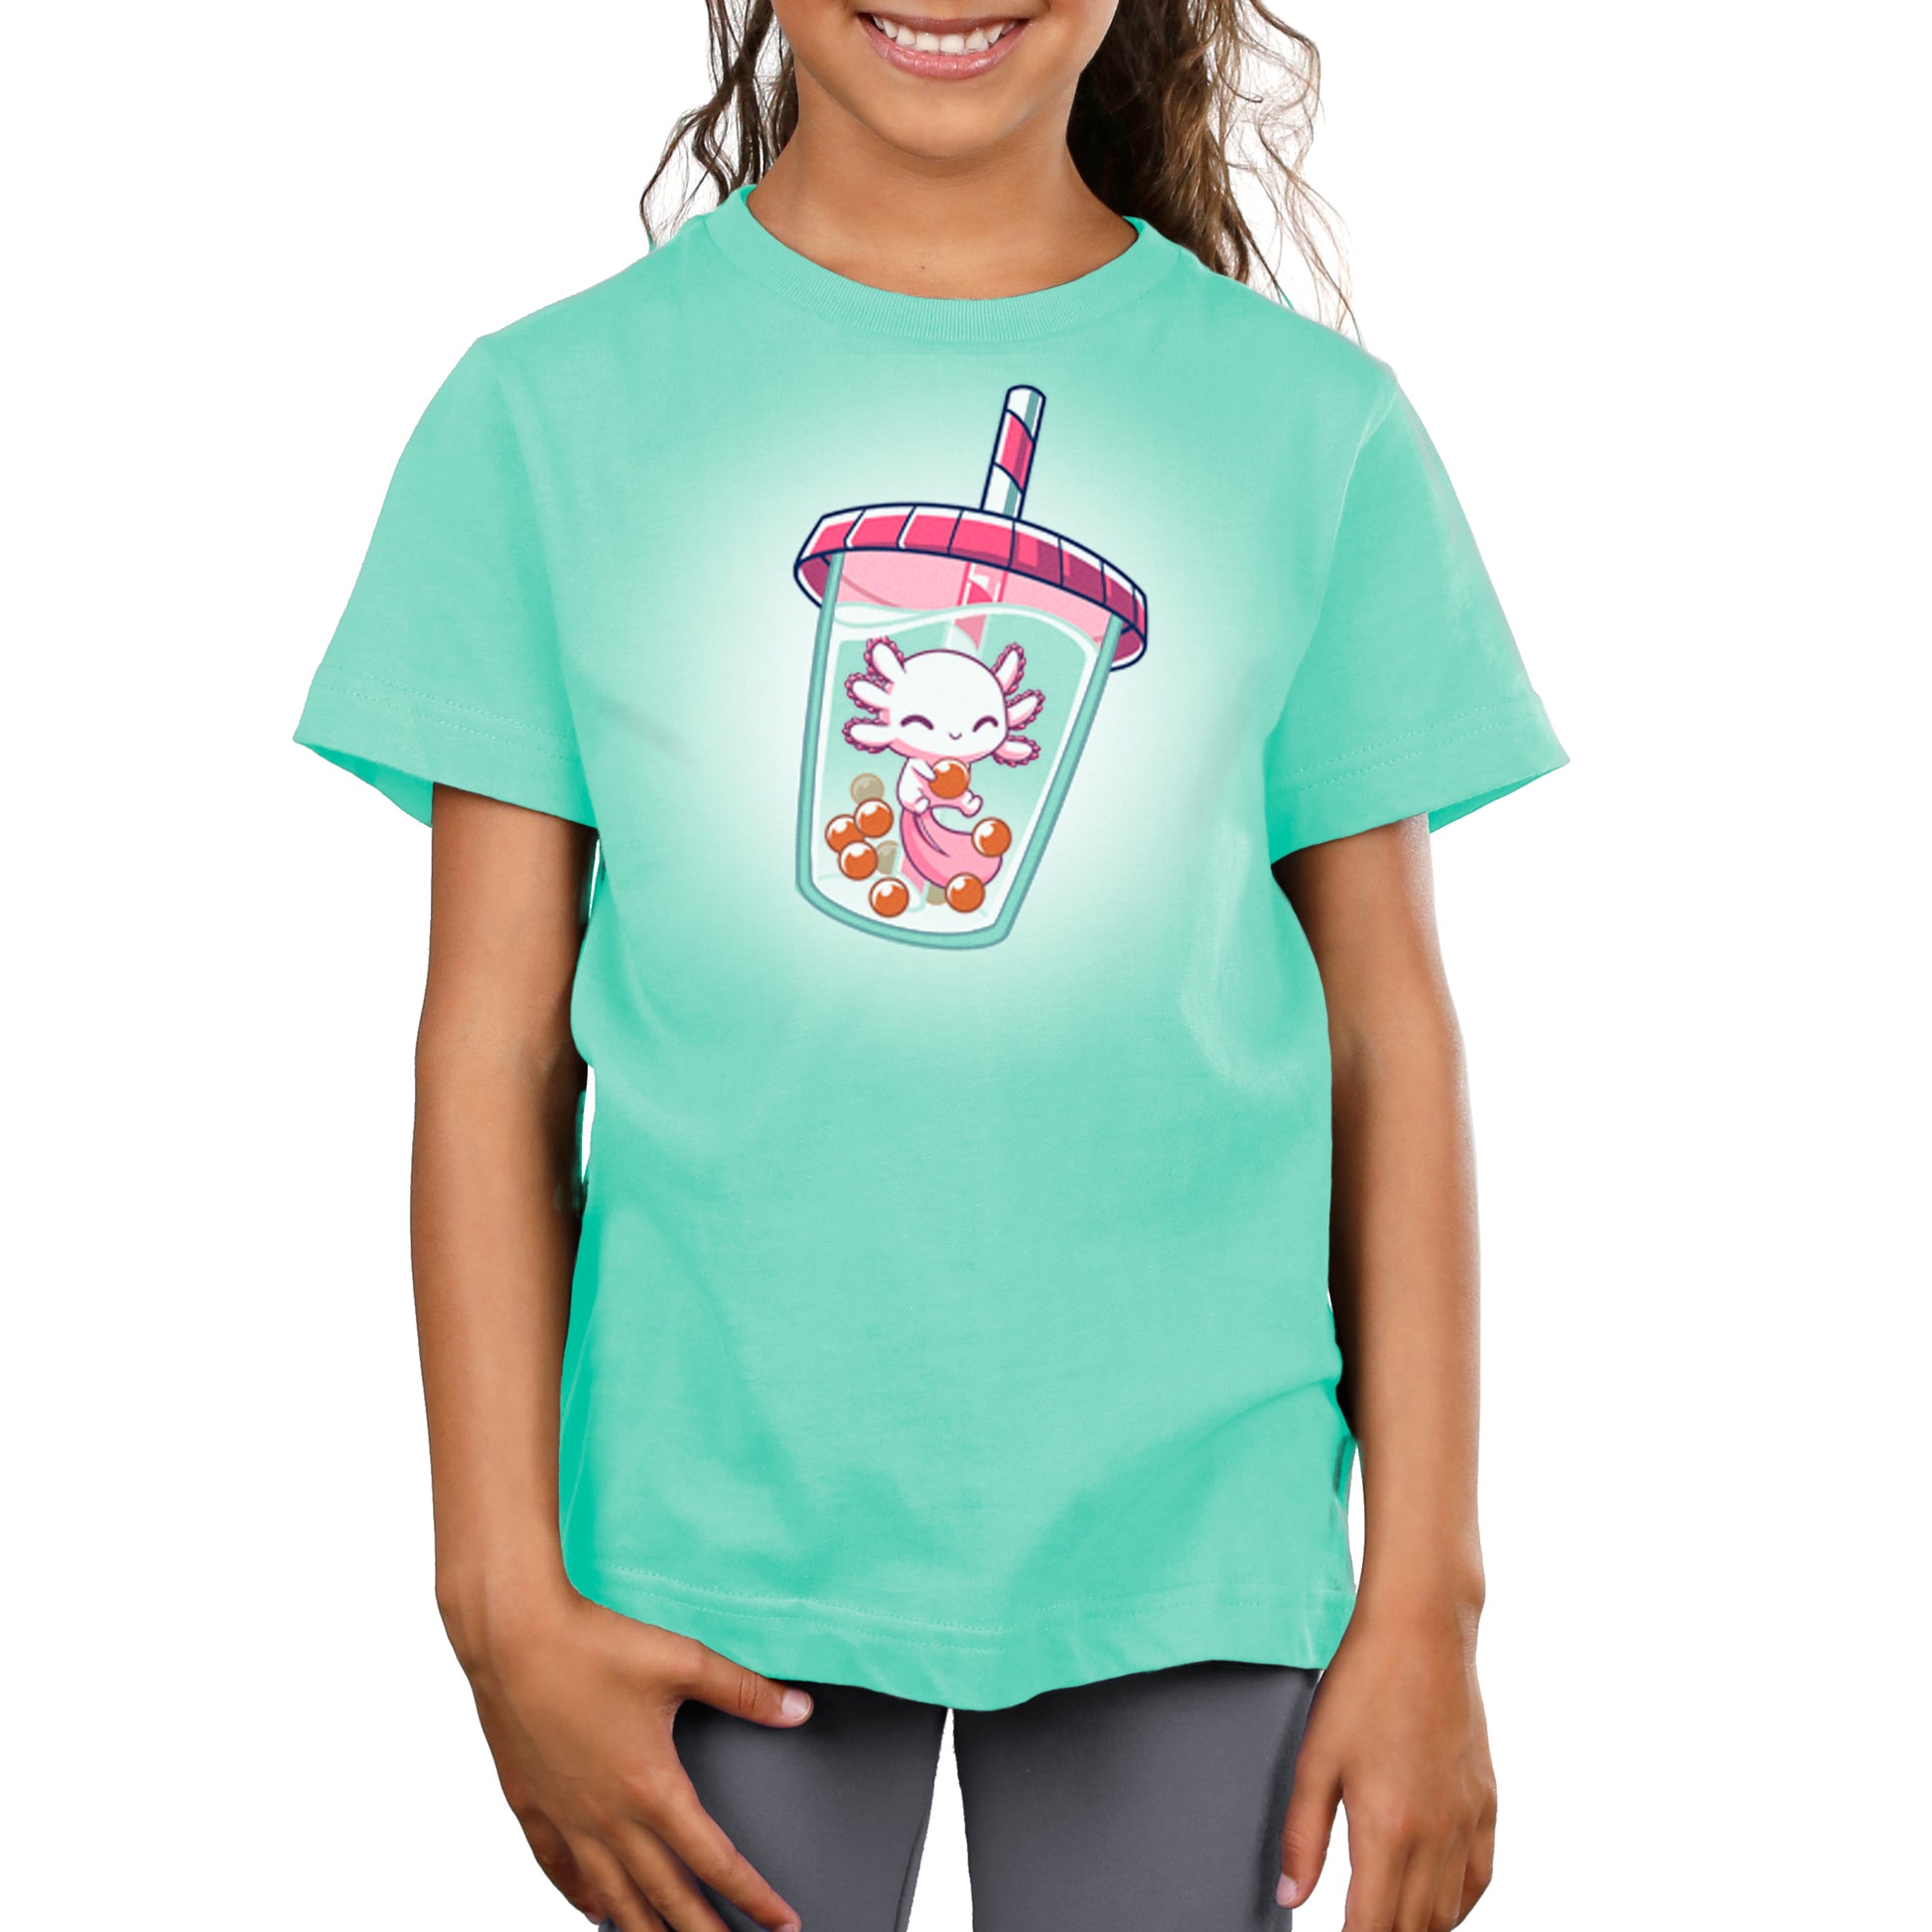 A girl wearing a TeeTurtle Boba Axolotl t-shirt.